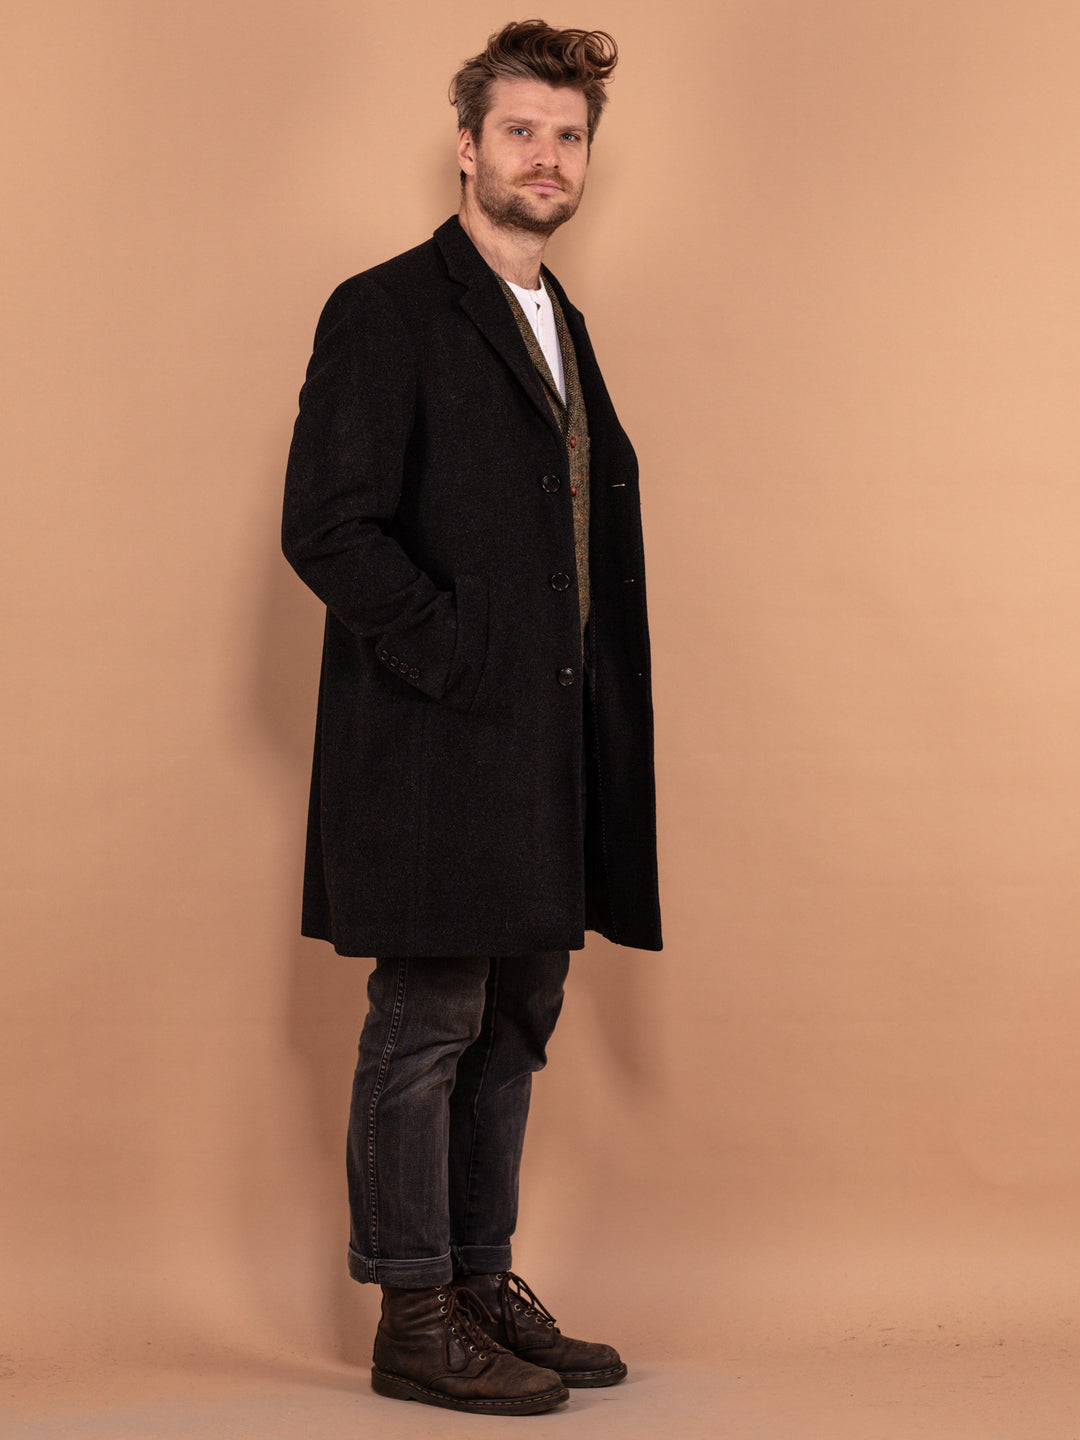 Black Wool Blend Coat 90's, Size M Medium, Vintage Lightweight Wool Topcoat, Classic Menswear, Elegant Outerwear, Minimalist Overcoat